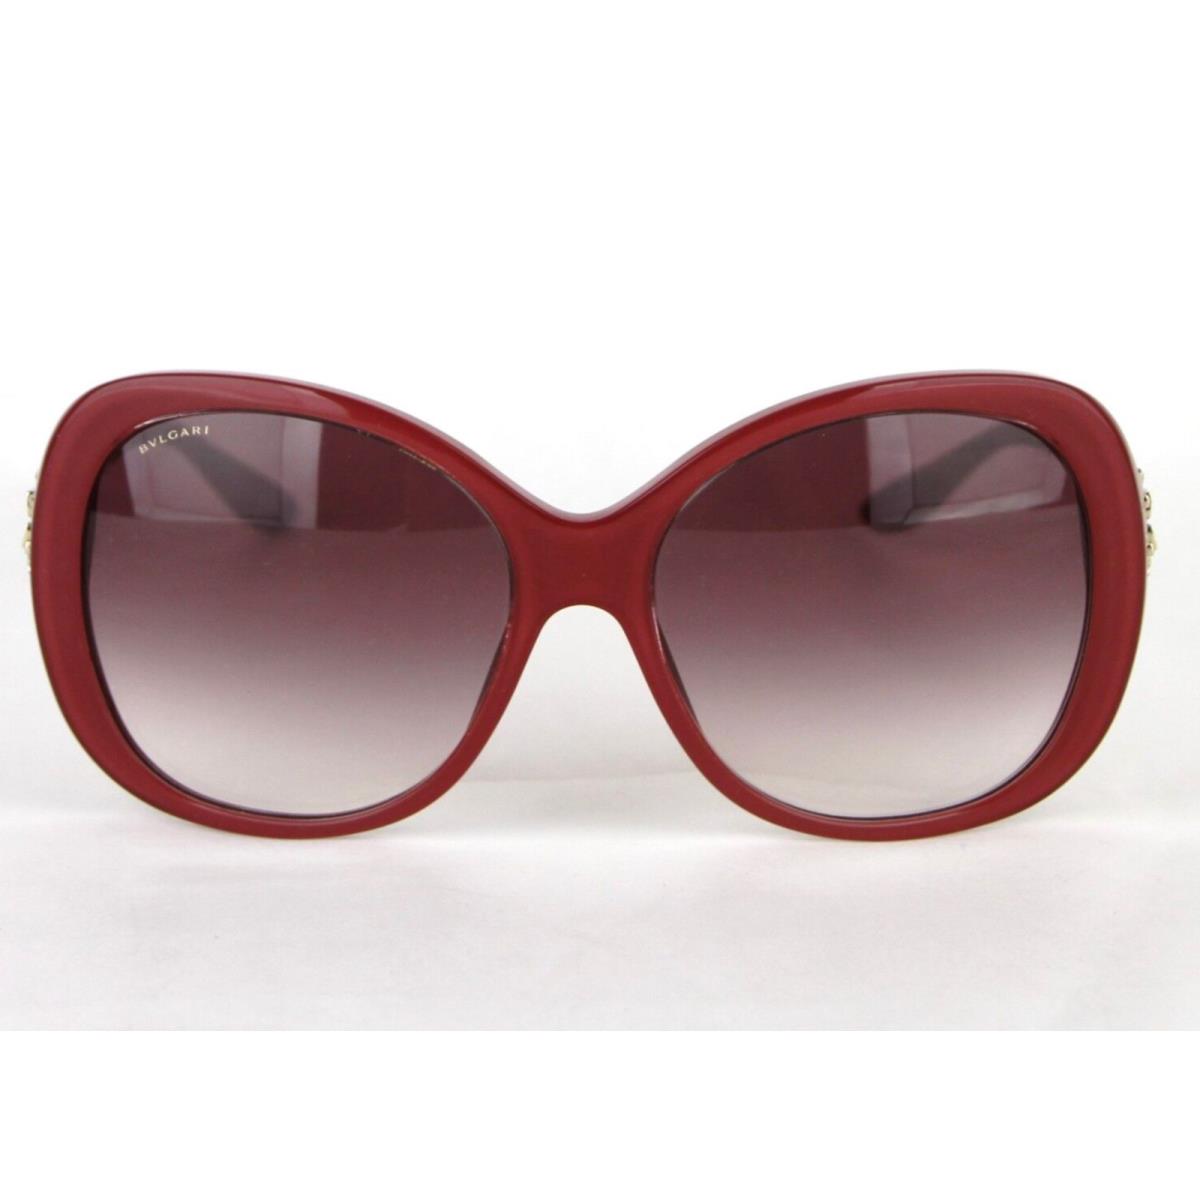 Bvlgari sunglasses  - Raspberry Frame, Violet Gradient Lens 0